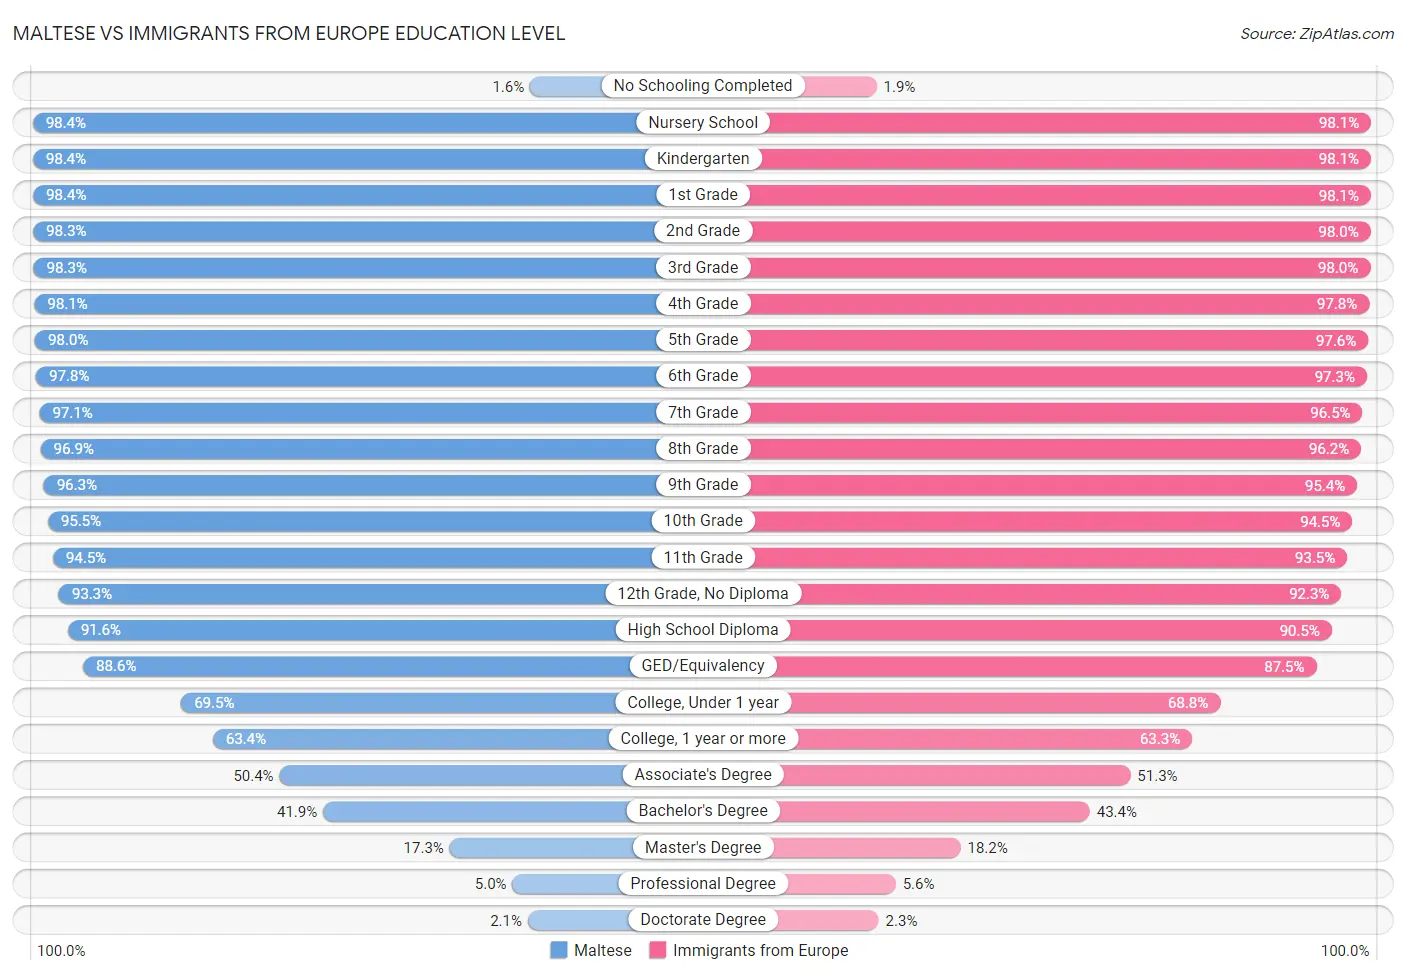 Maltese vs Immigrants from Europe Education Level